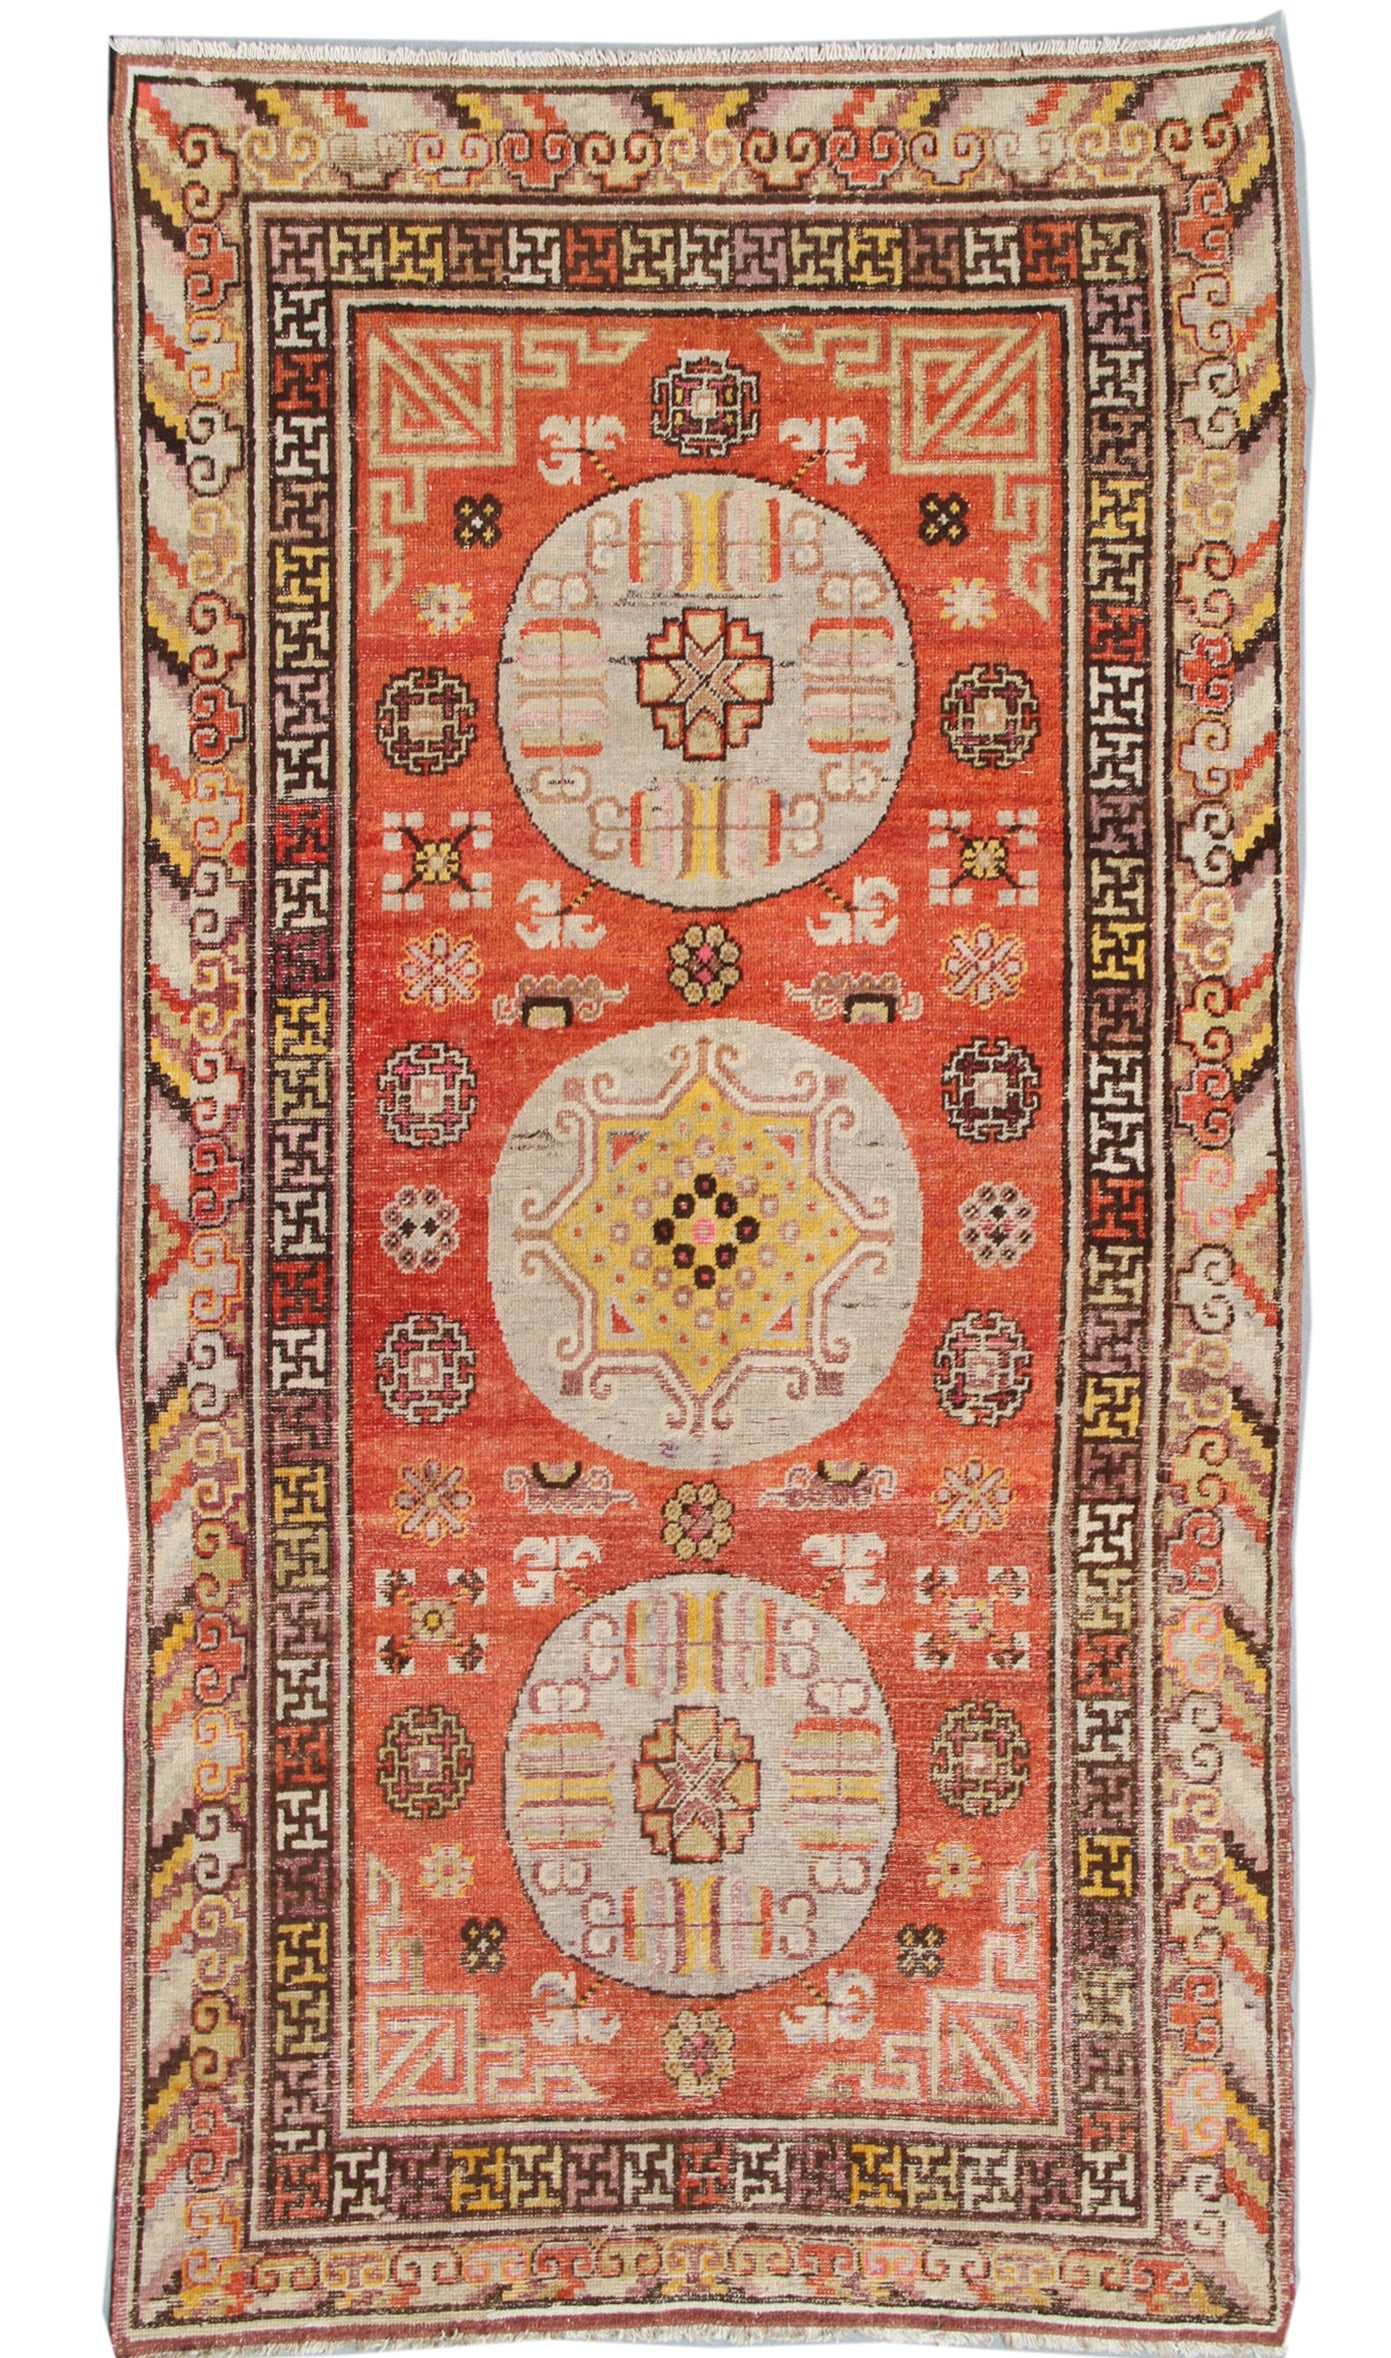 5'x9' Orange Red Aqua Medallion Vintage Antique Samarkand Khotan Area Rug